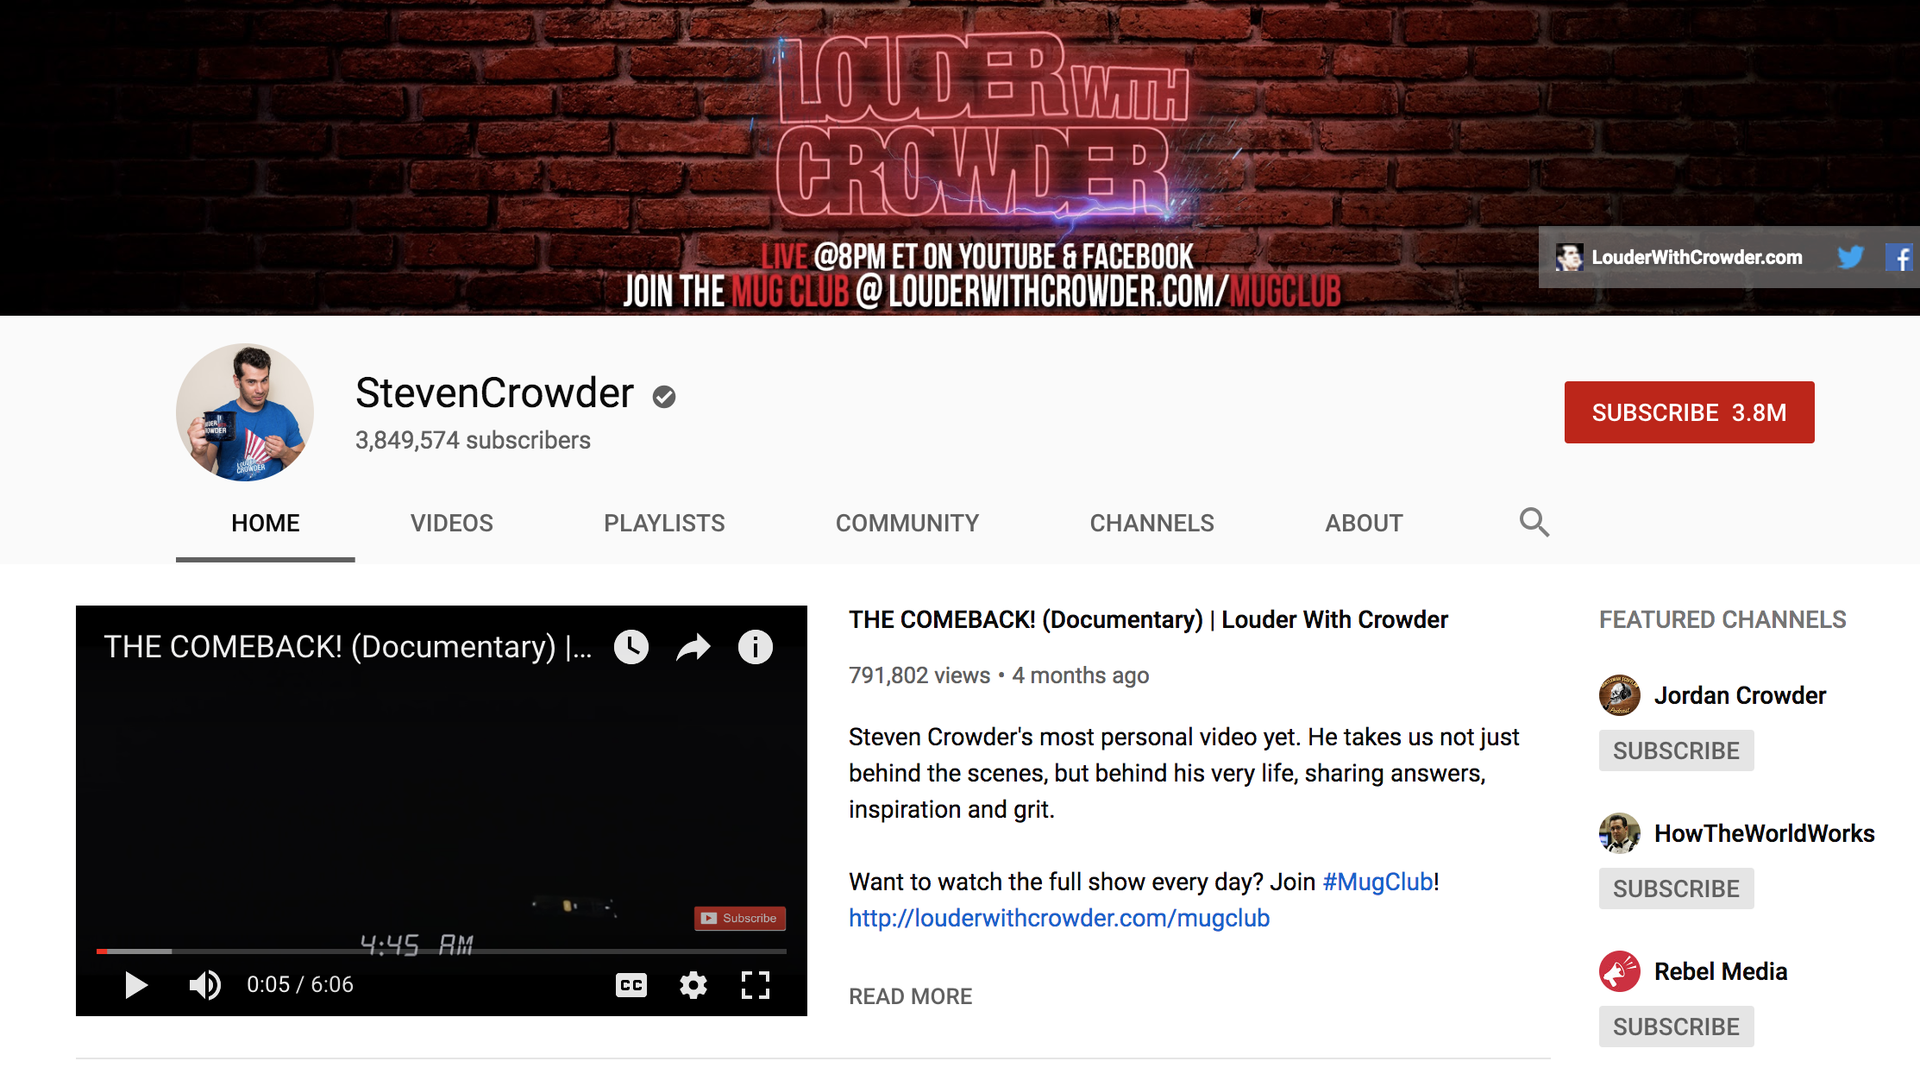 Steven Crowder's YouTube channel